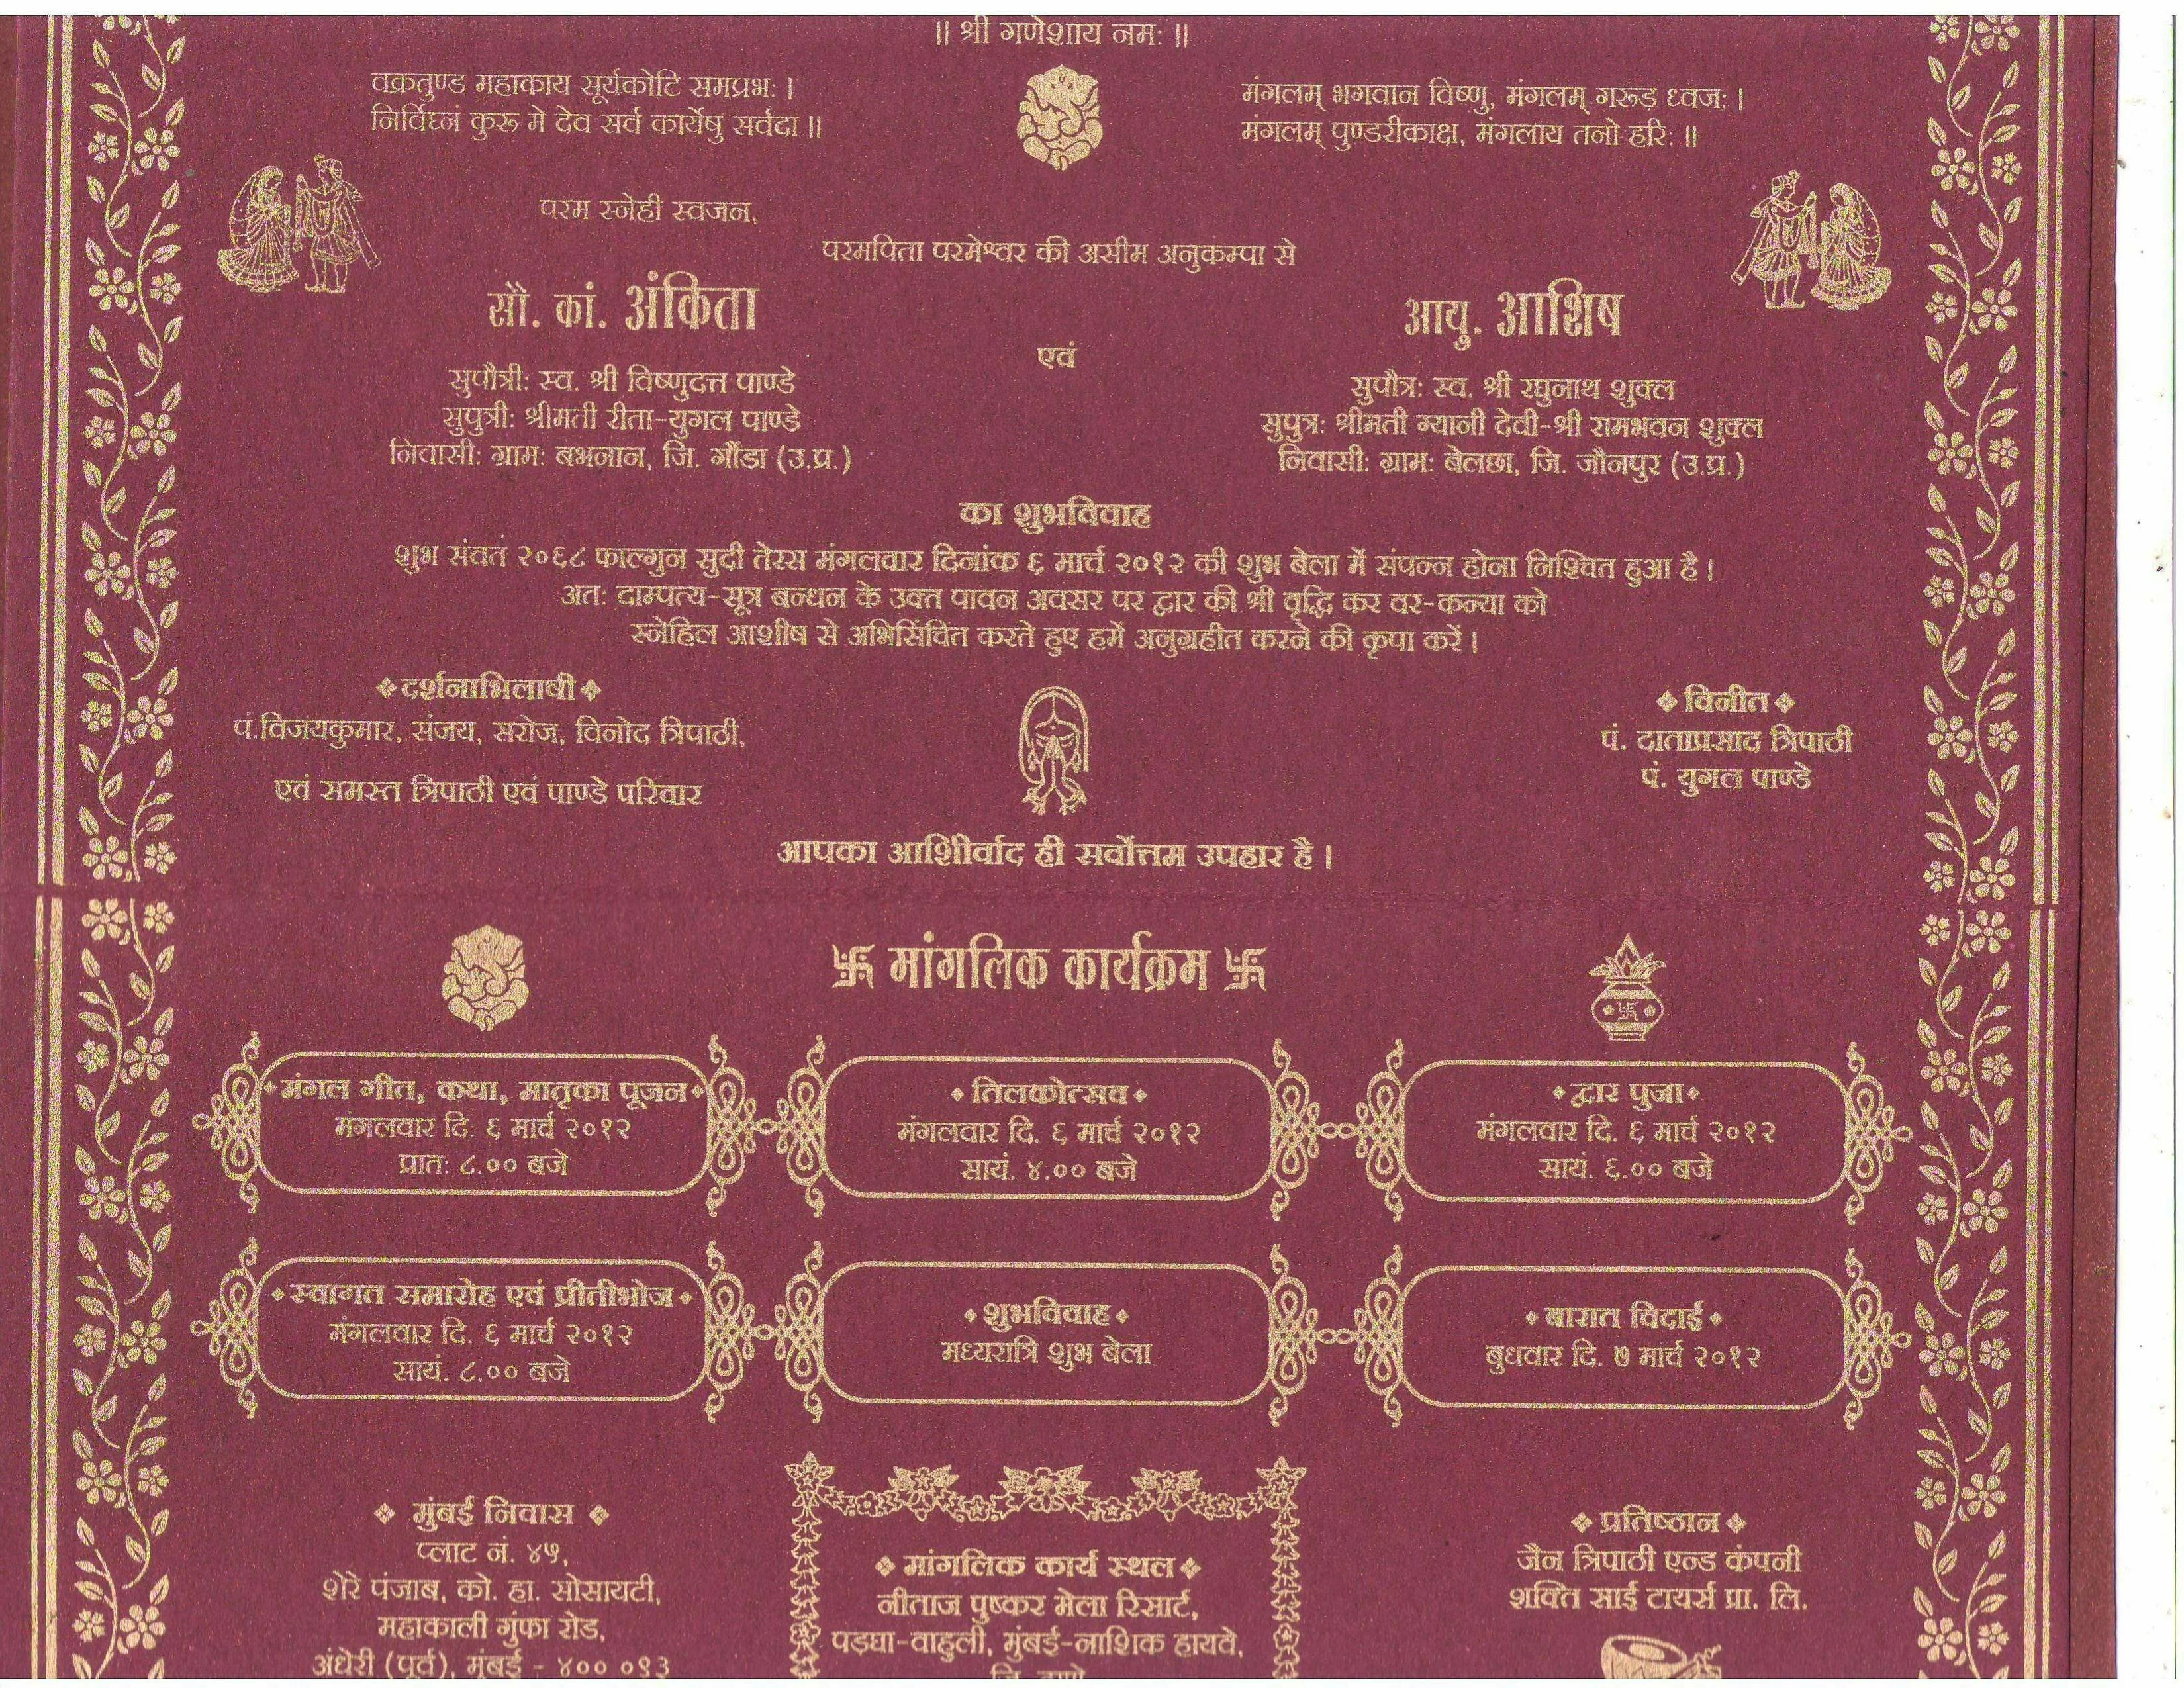 Invitation card for wedding in hindi